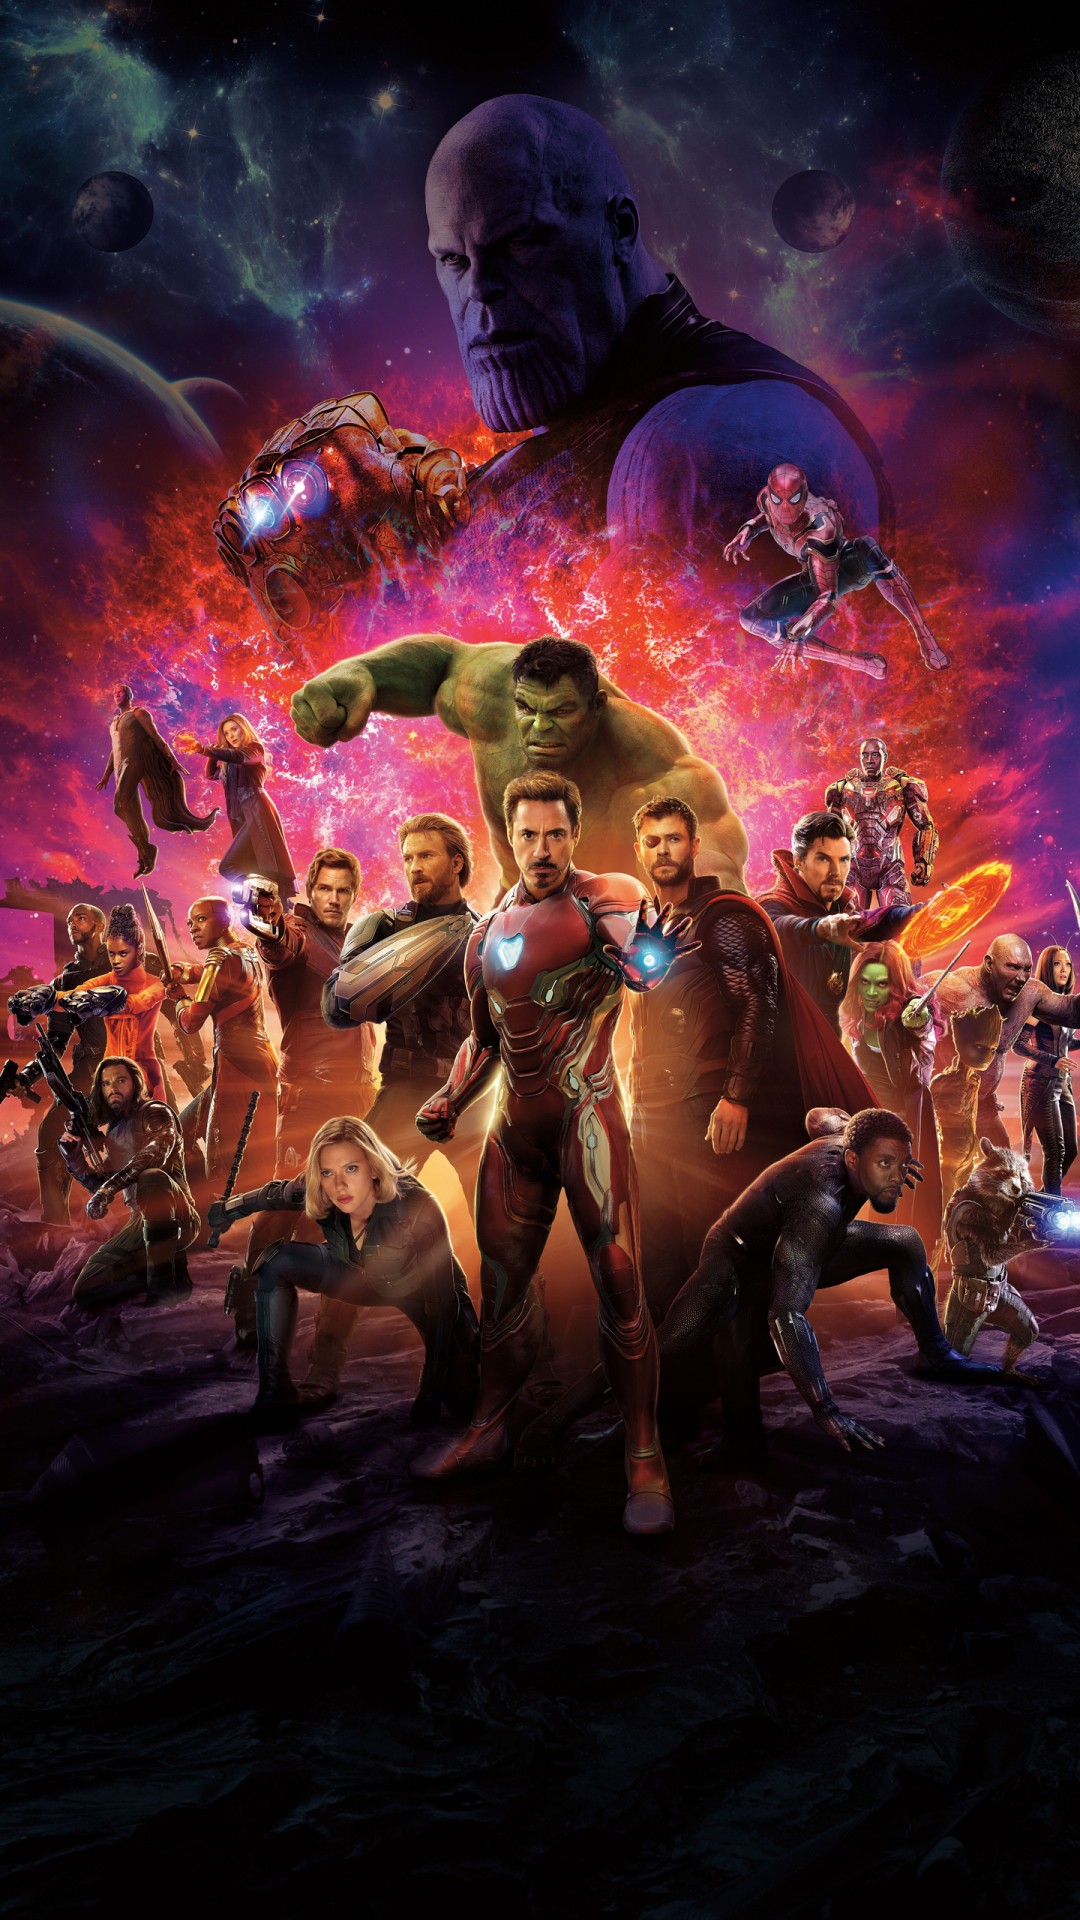 Avengers Infinity War Iphone Wallpapers